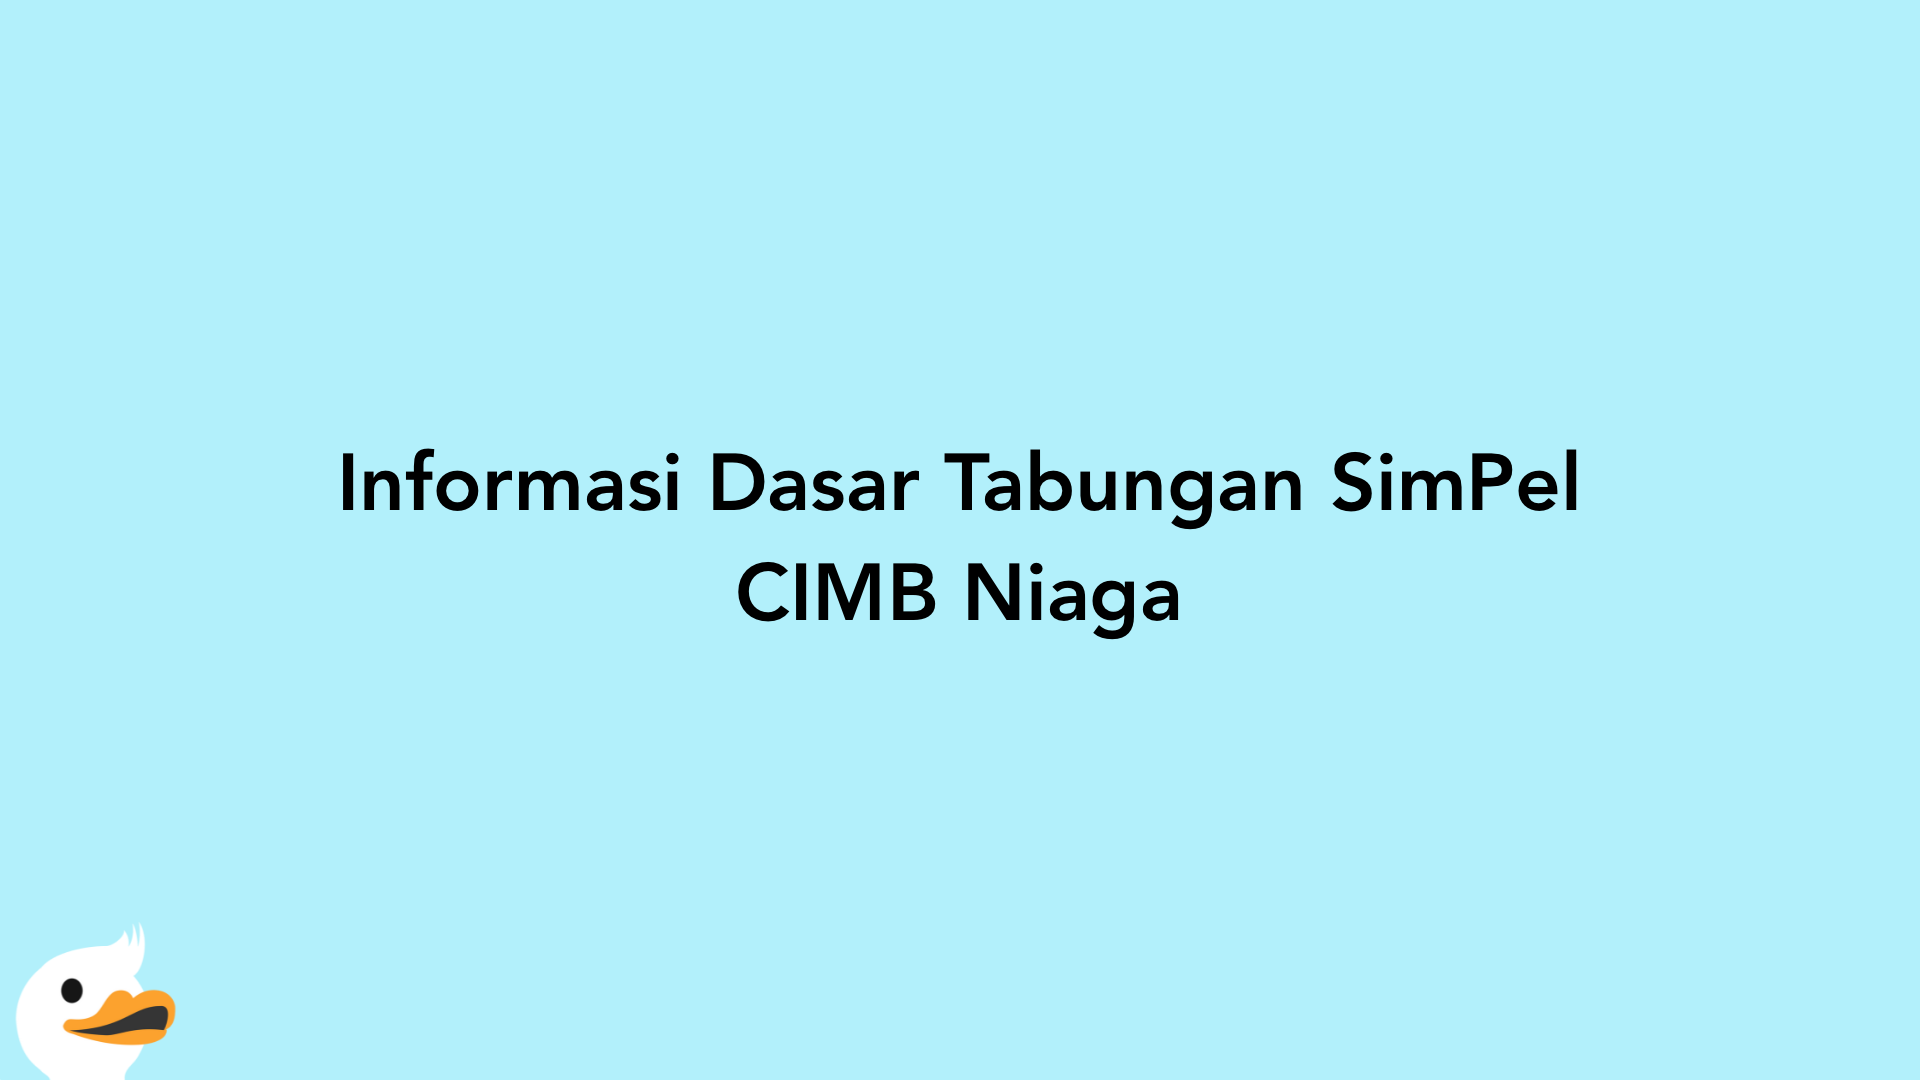 Informasi Dasar Tabungan SimPel CIMB Niaga